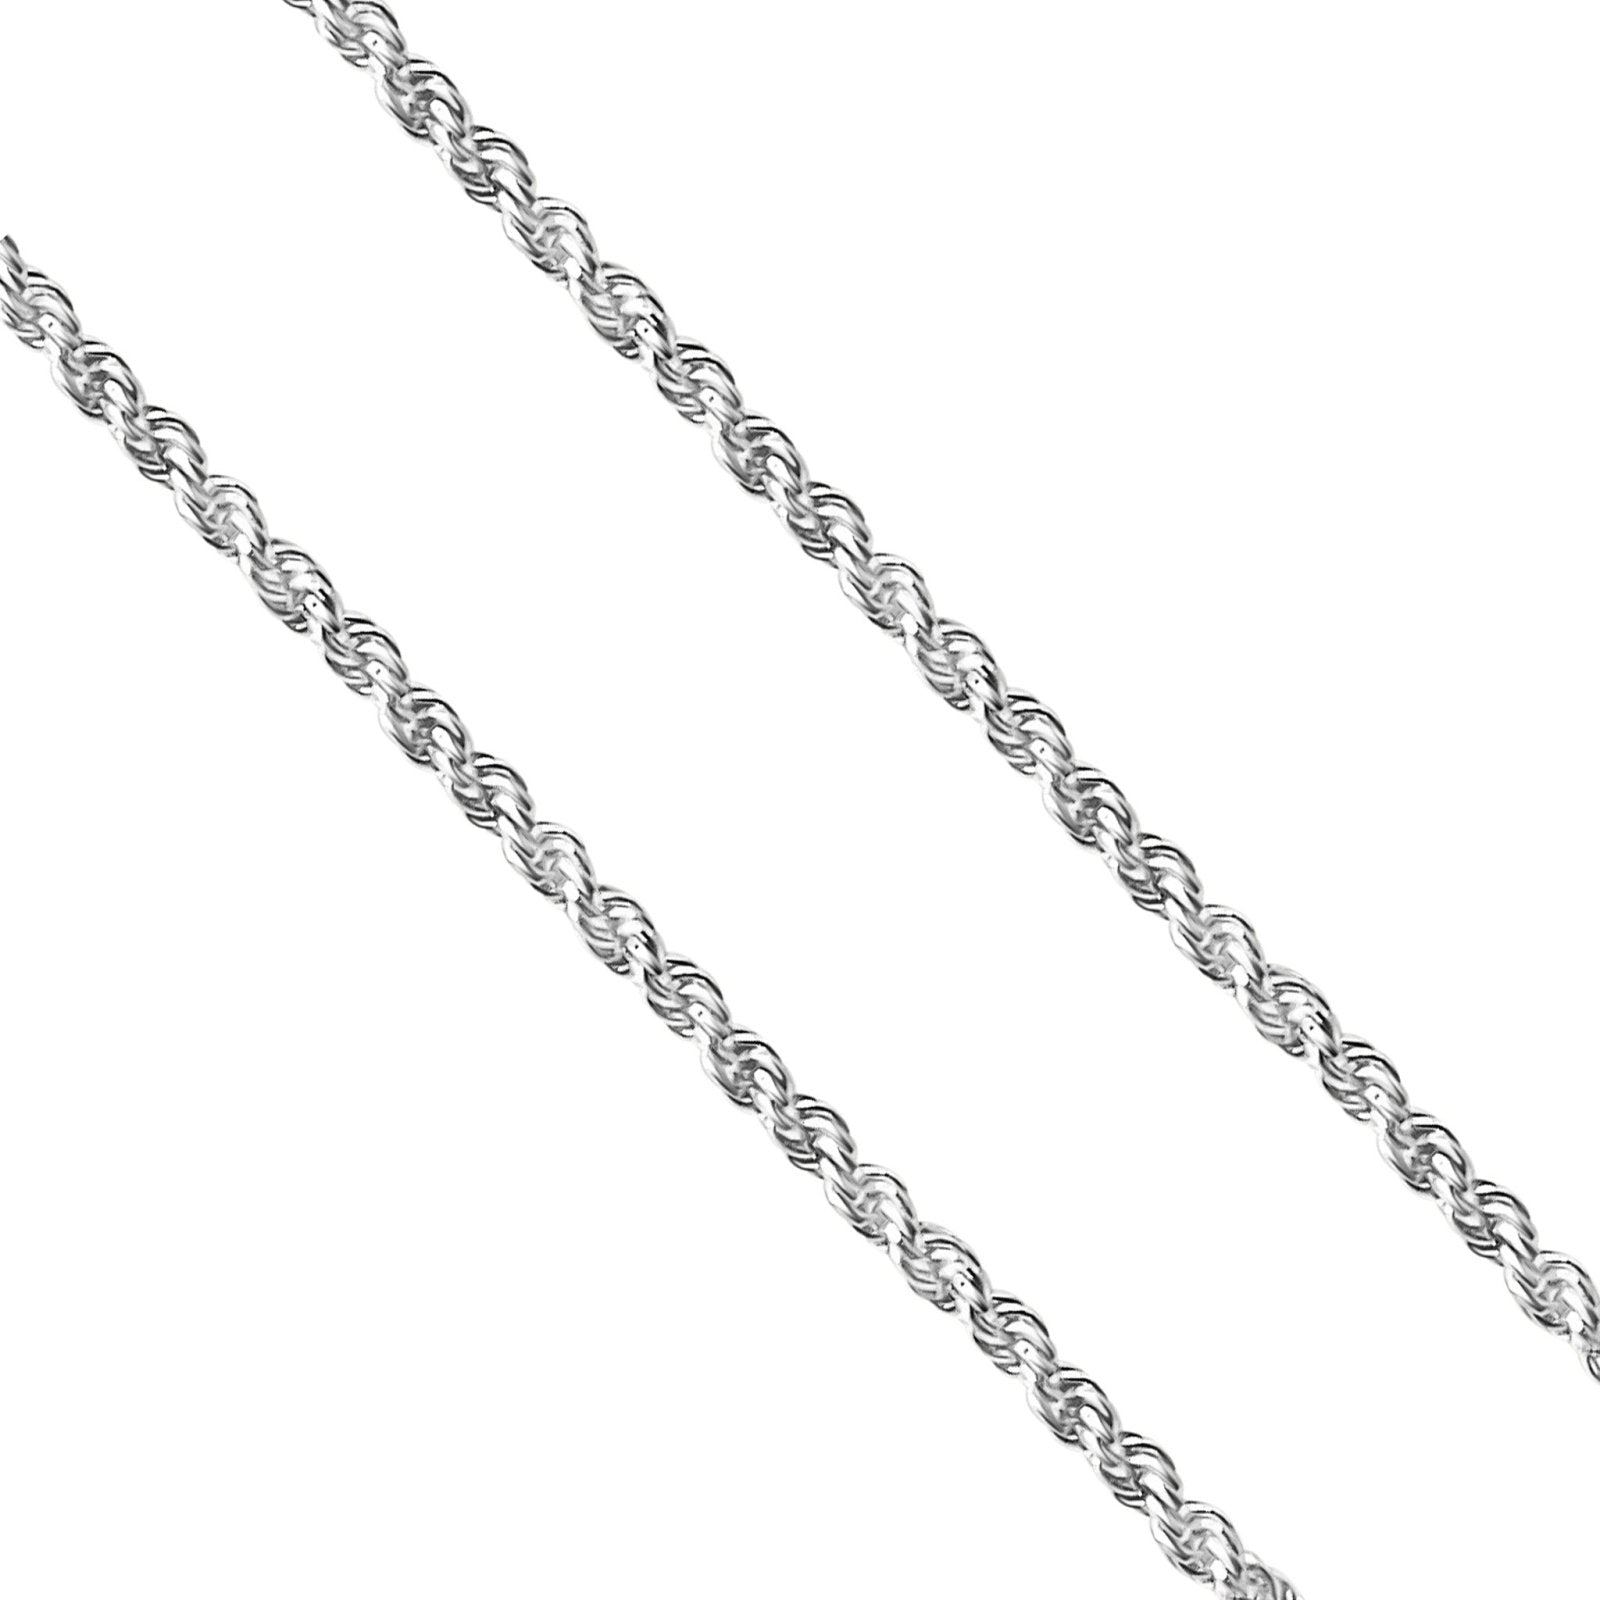 Silver Rope Chain - Honoura